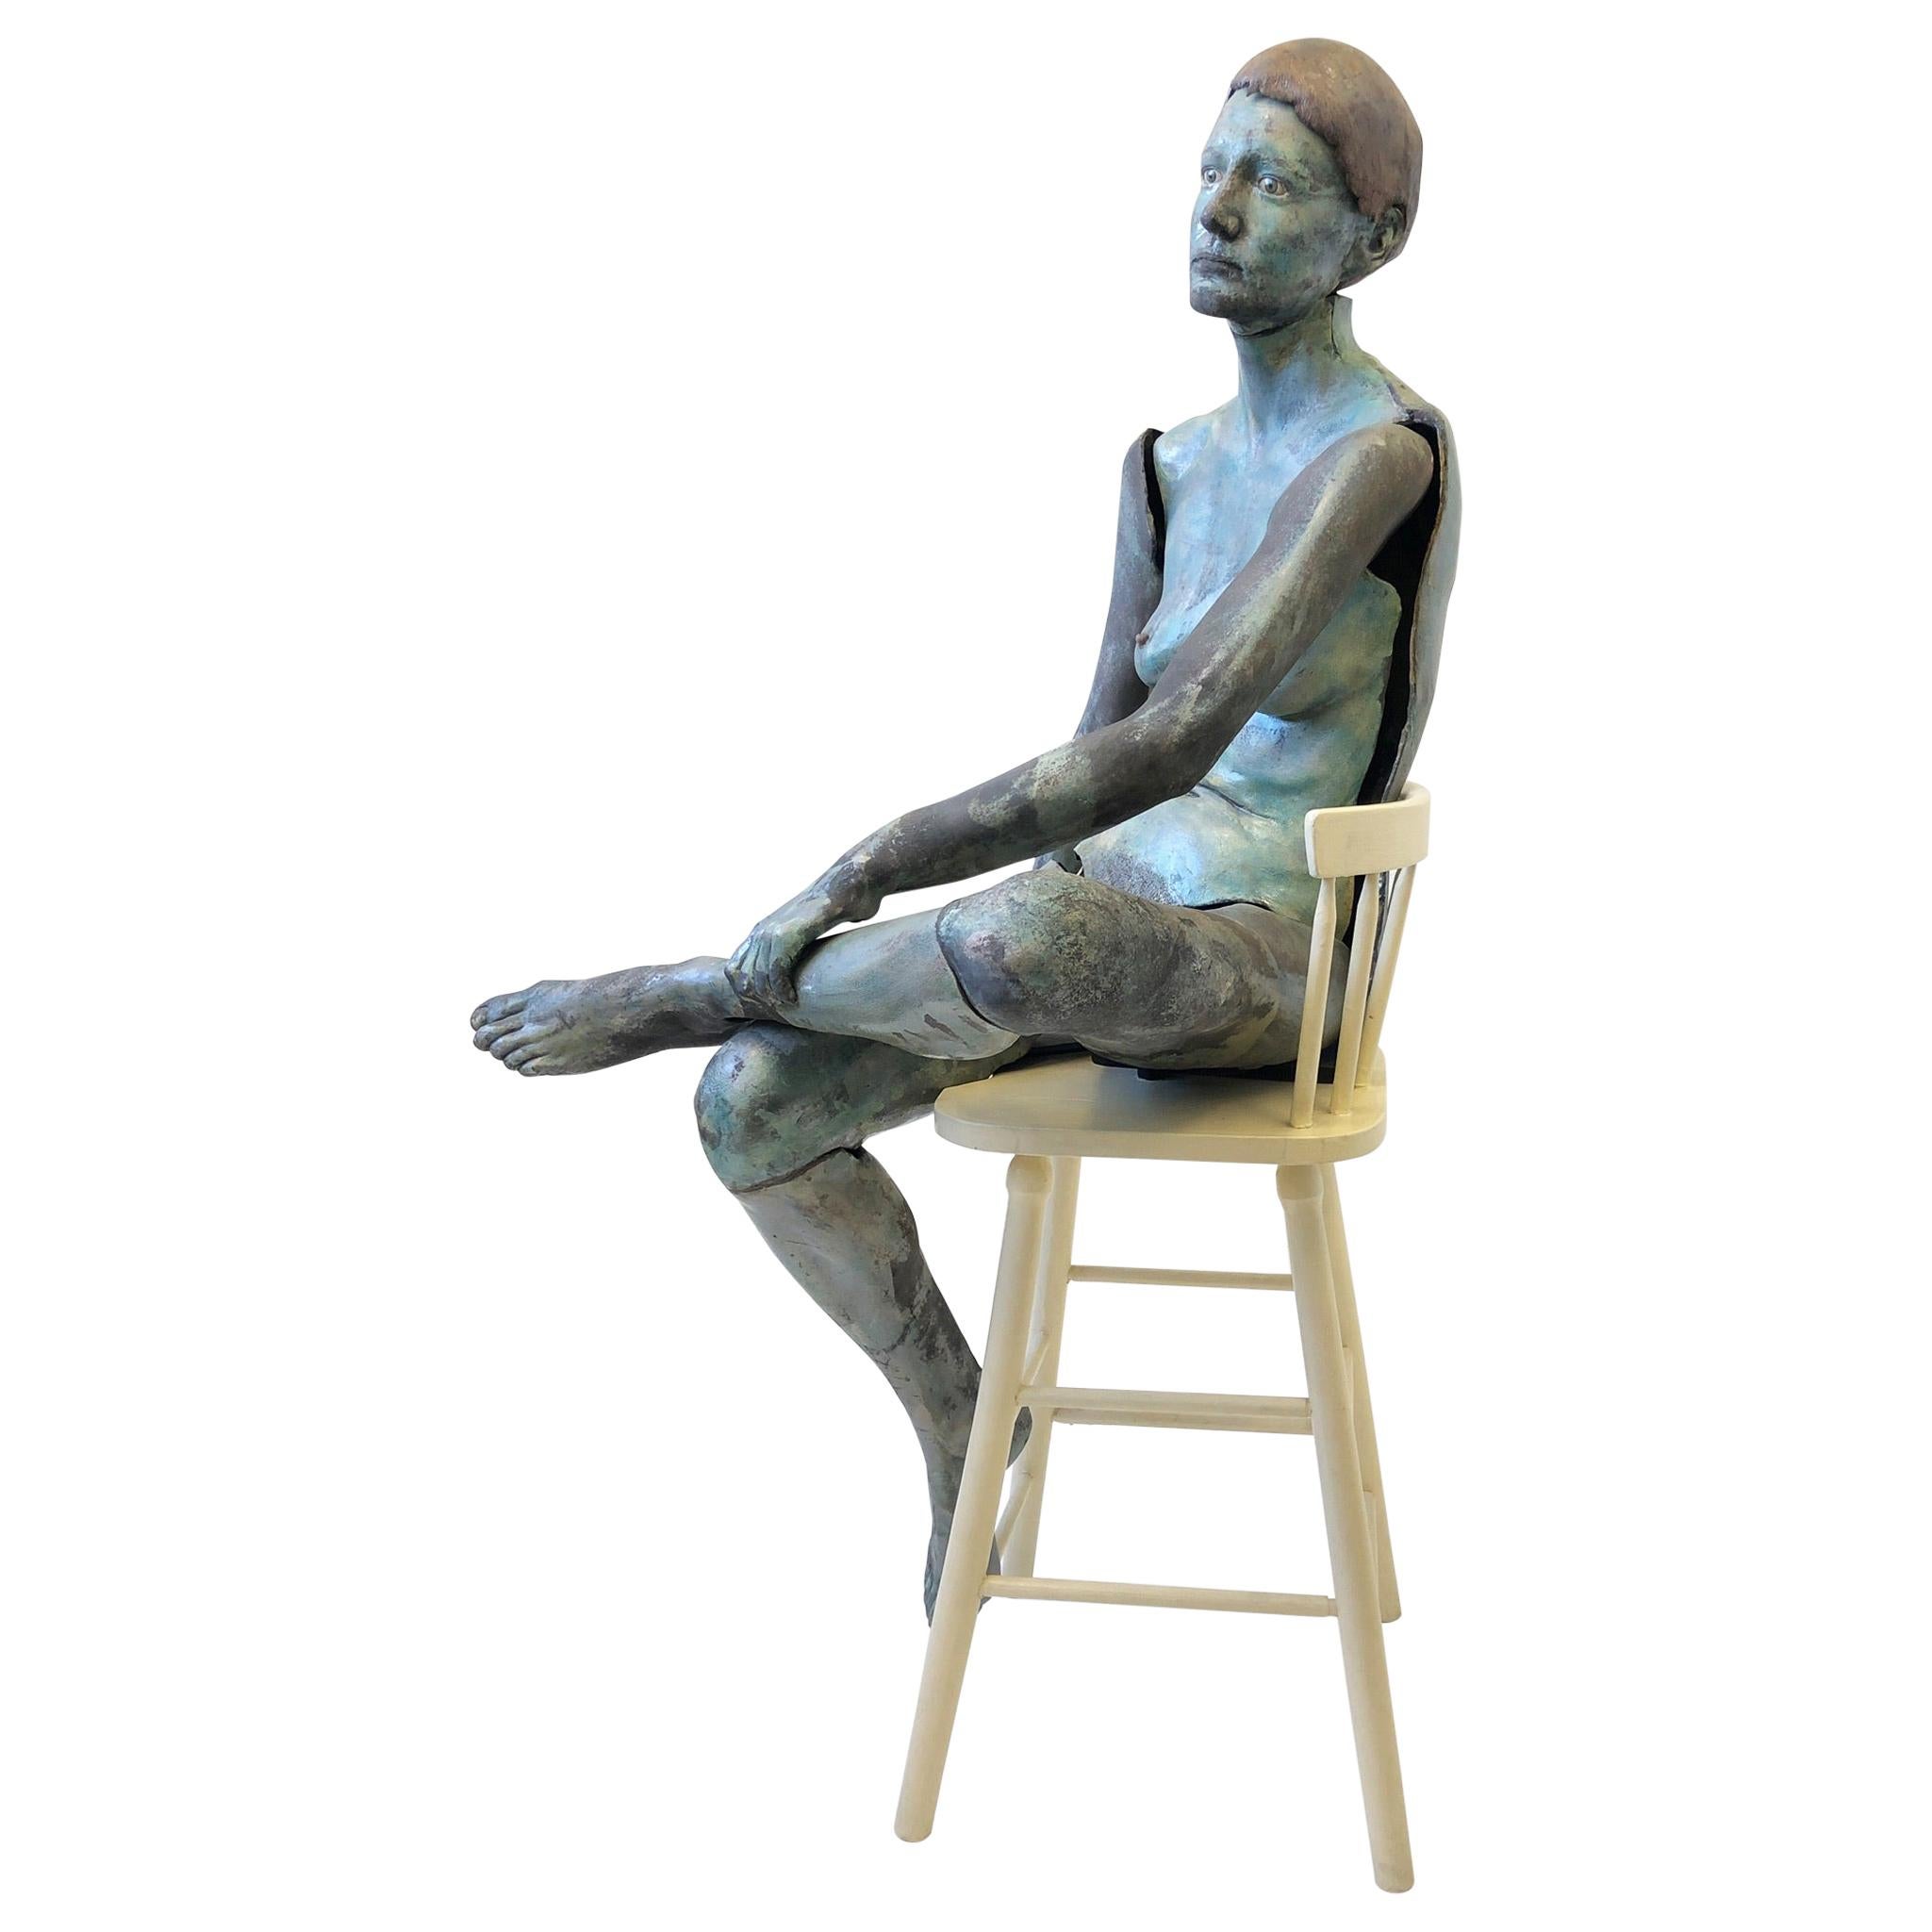 Life-Size Ceramic Female Sculpture by Eva Stettner